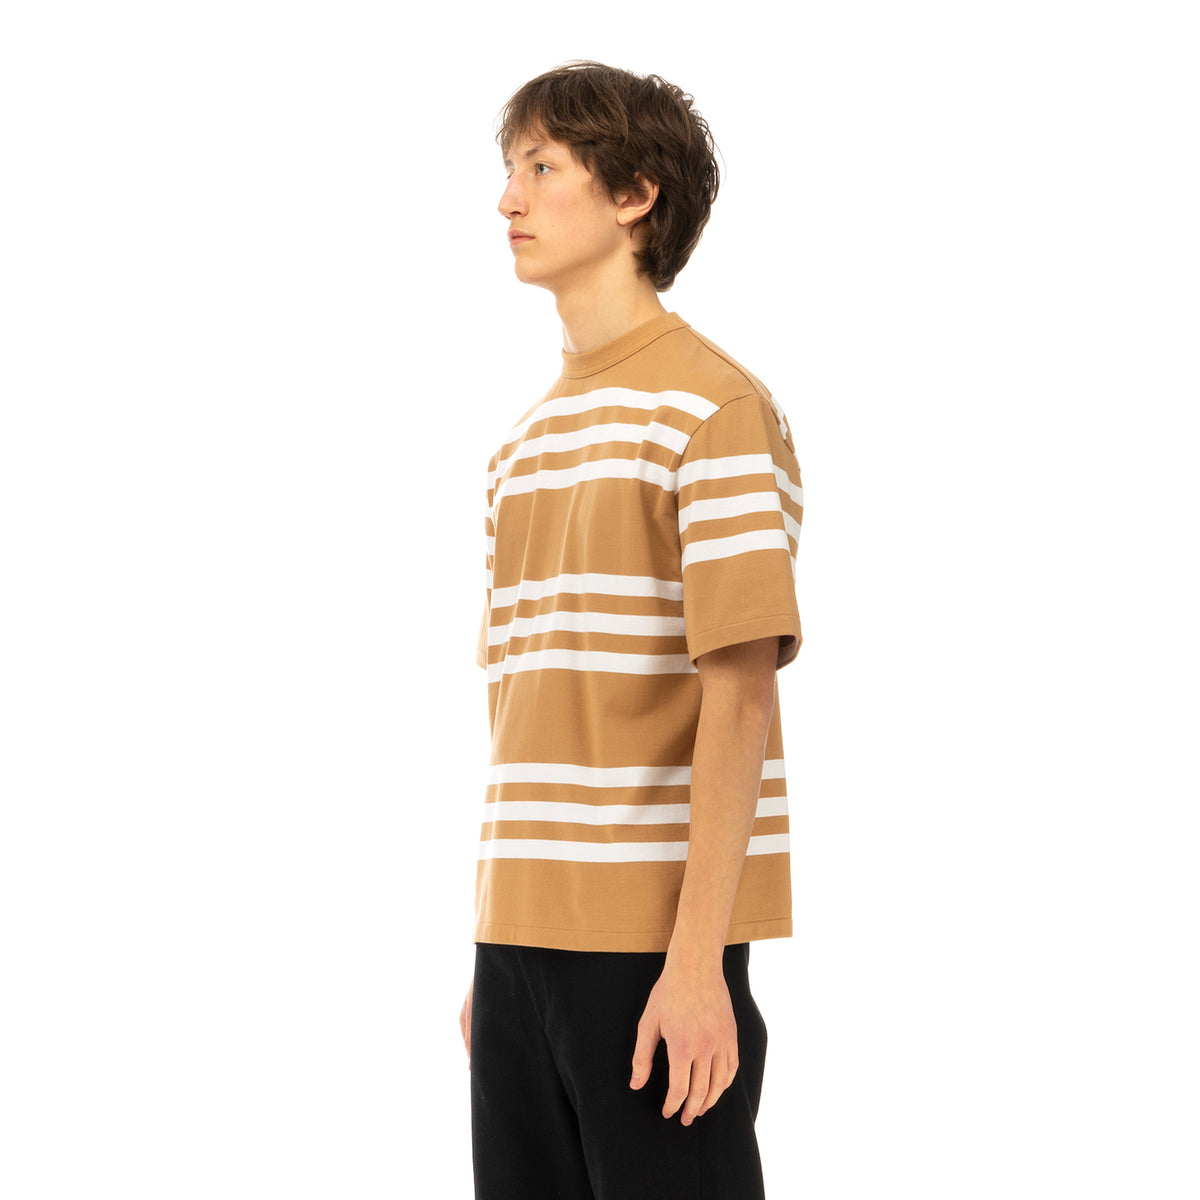 Haversack | Stripe T-Shirt 812004-31 Beige - Concrete